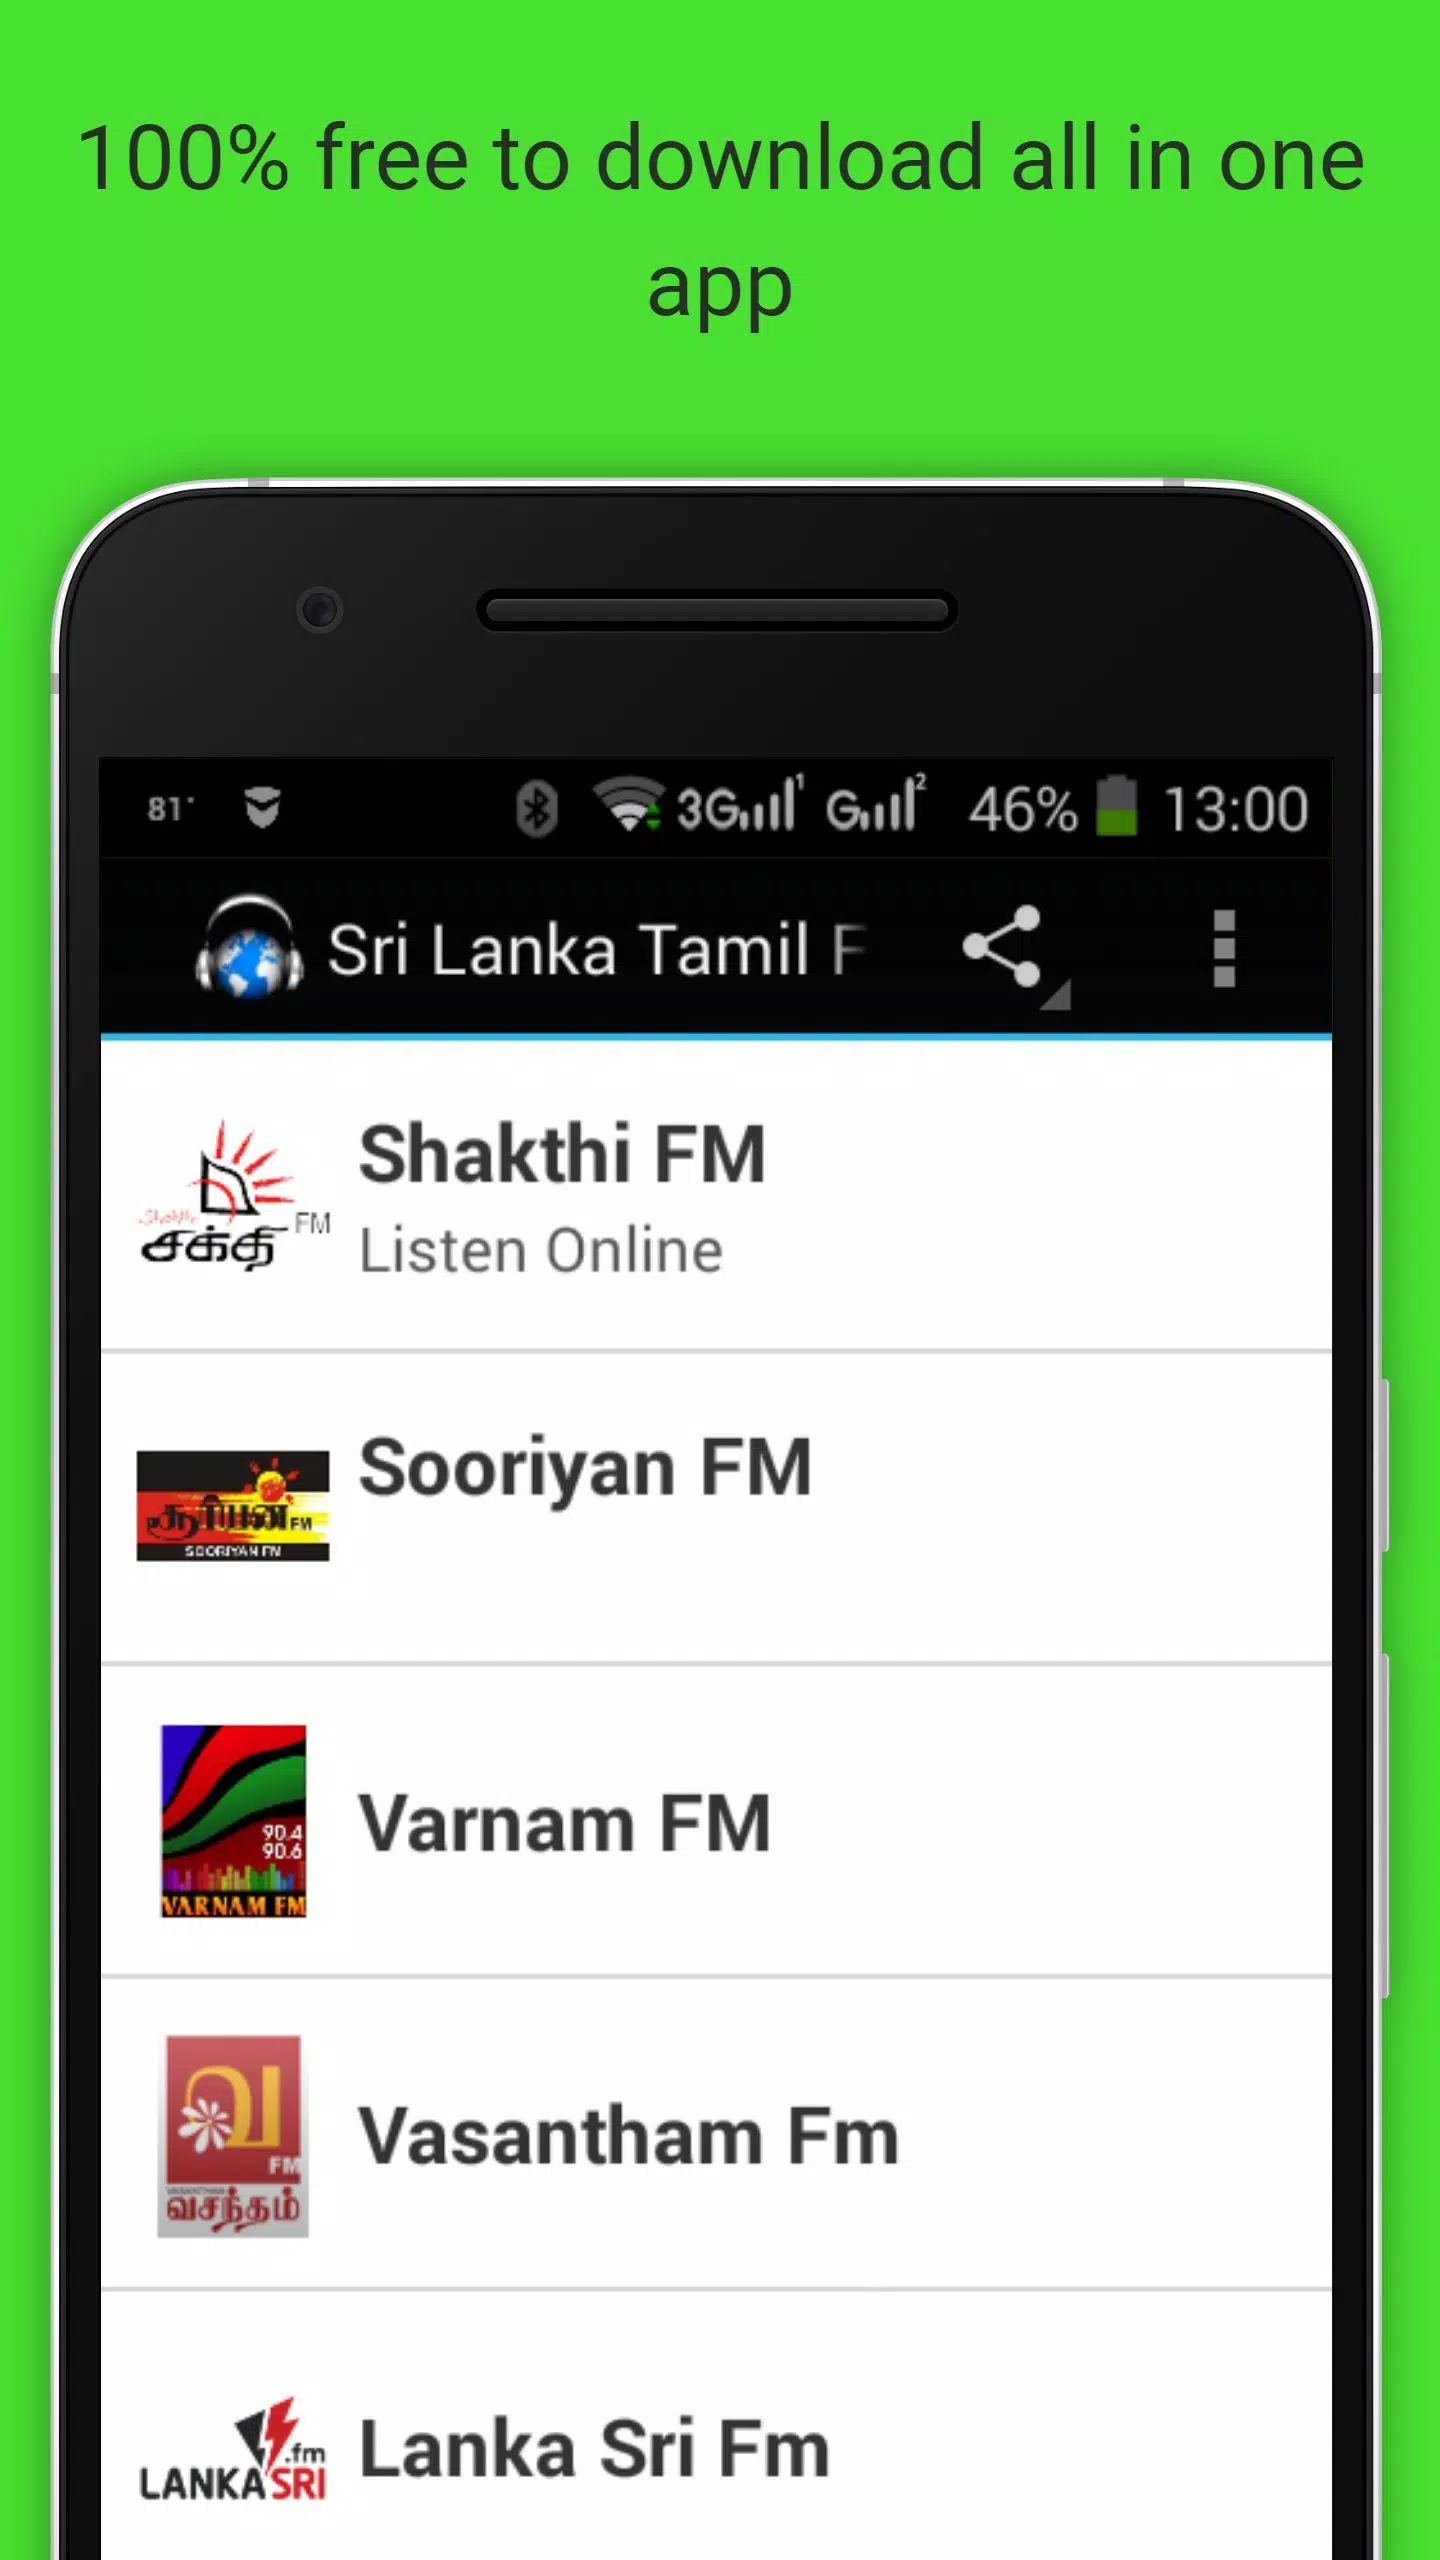 Sri Lanka Tamil FM Radio APK for Android Download